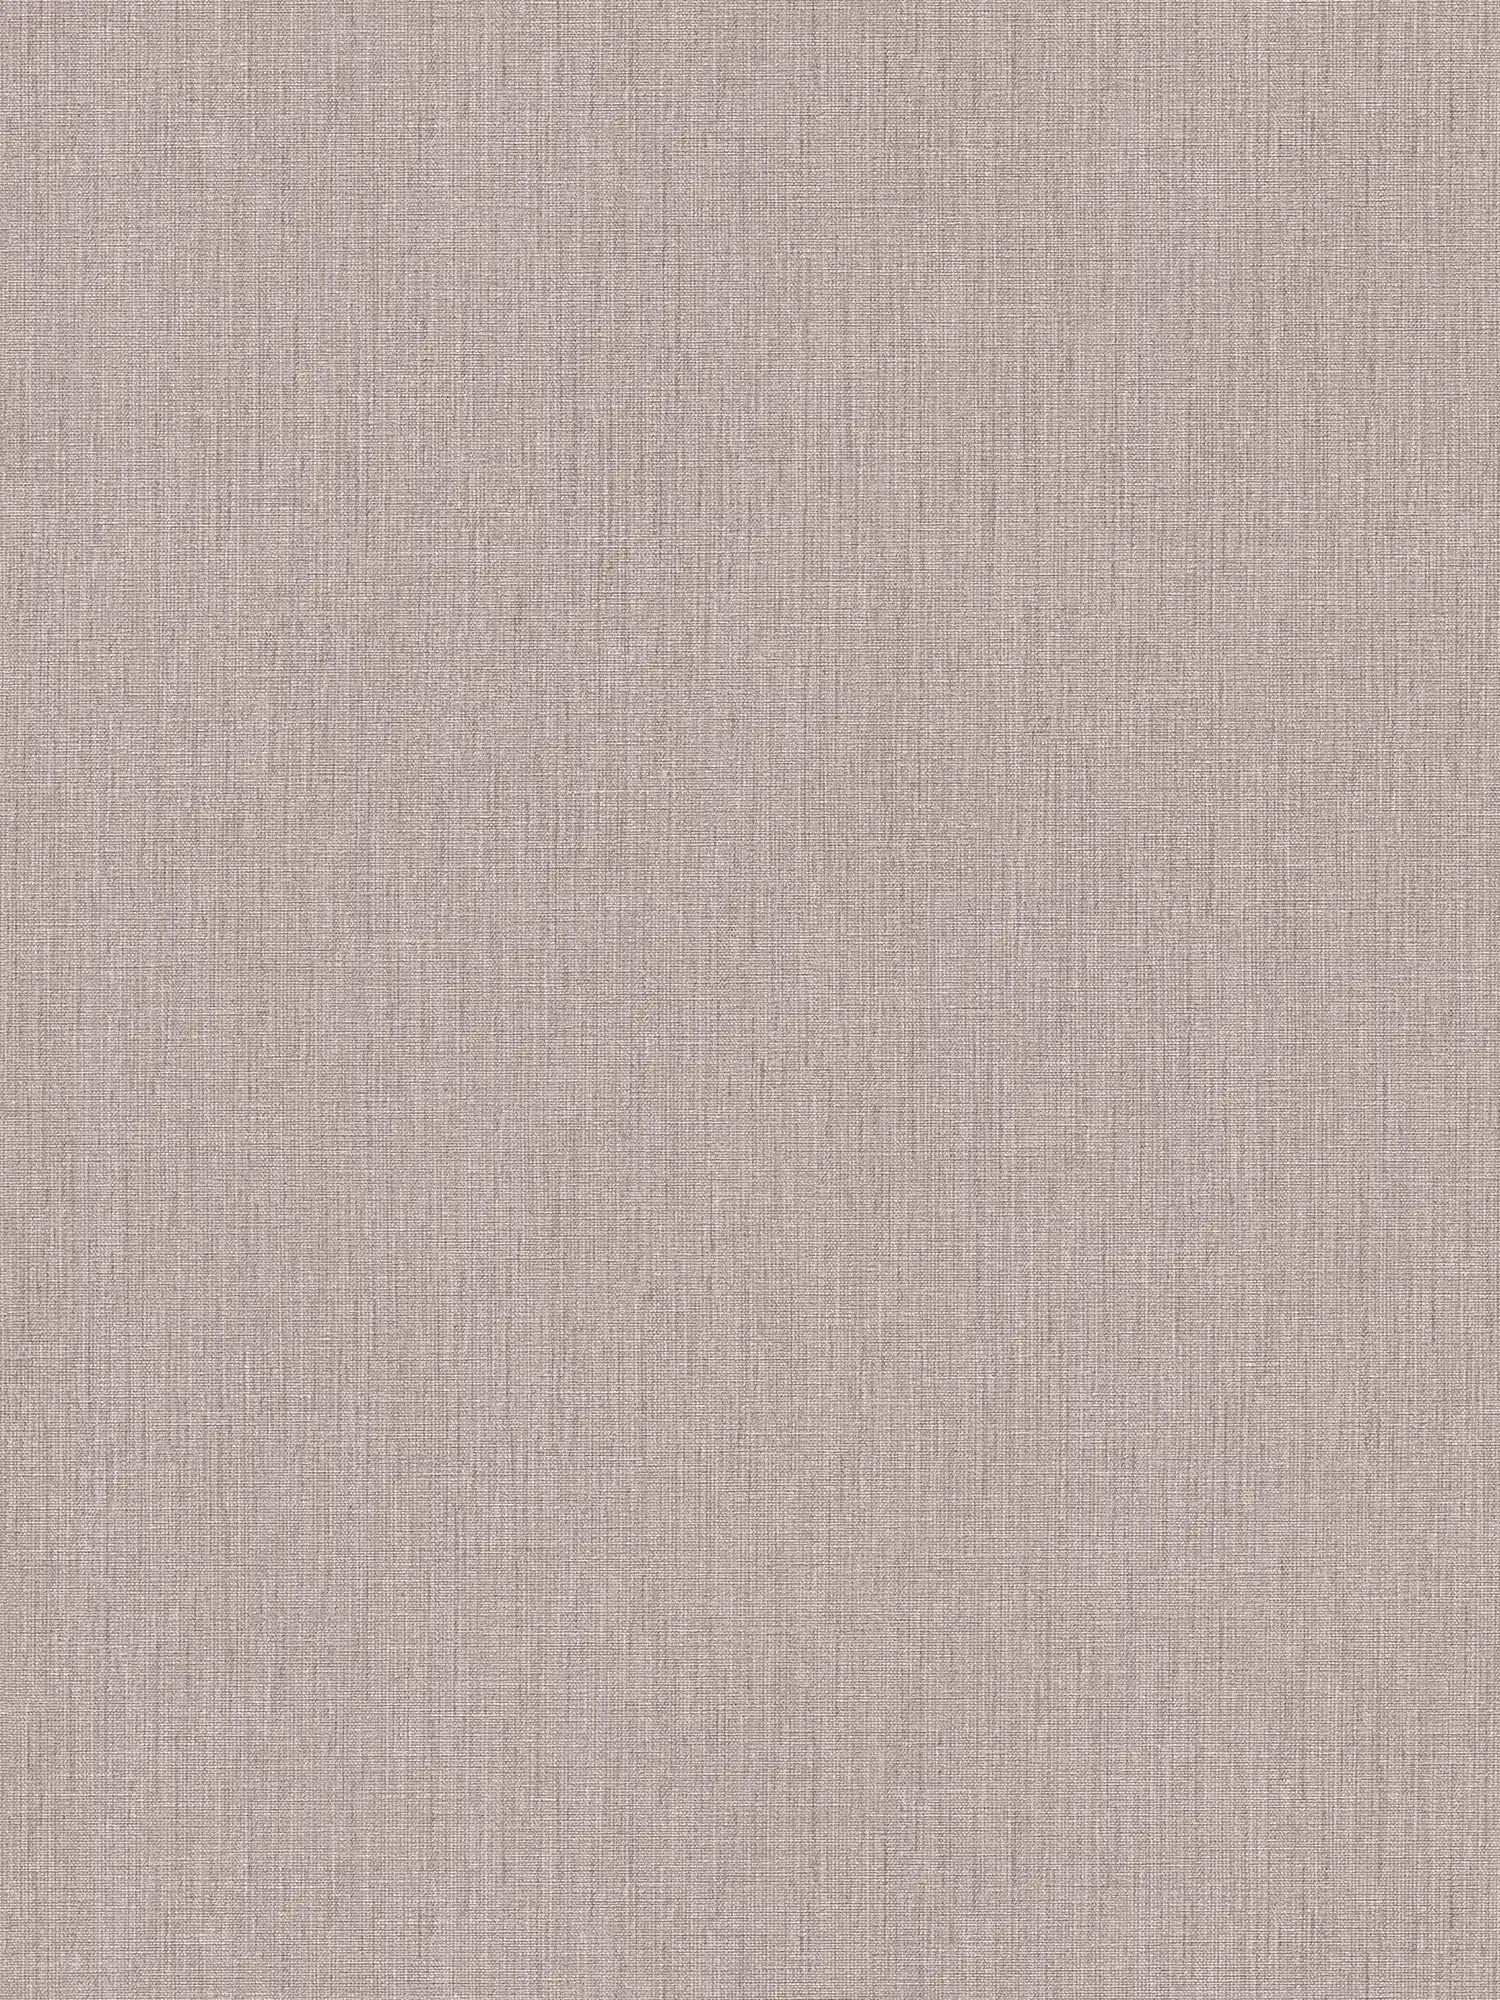 Single-coloured non-woven wallpaper with texture in matt look - brown
